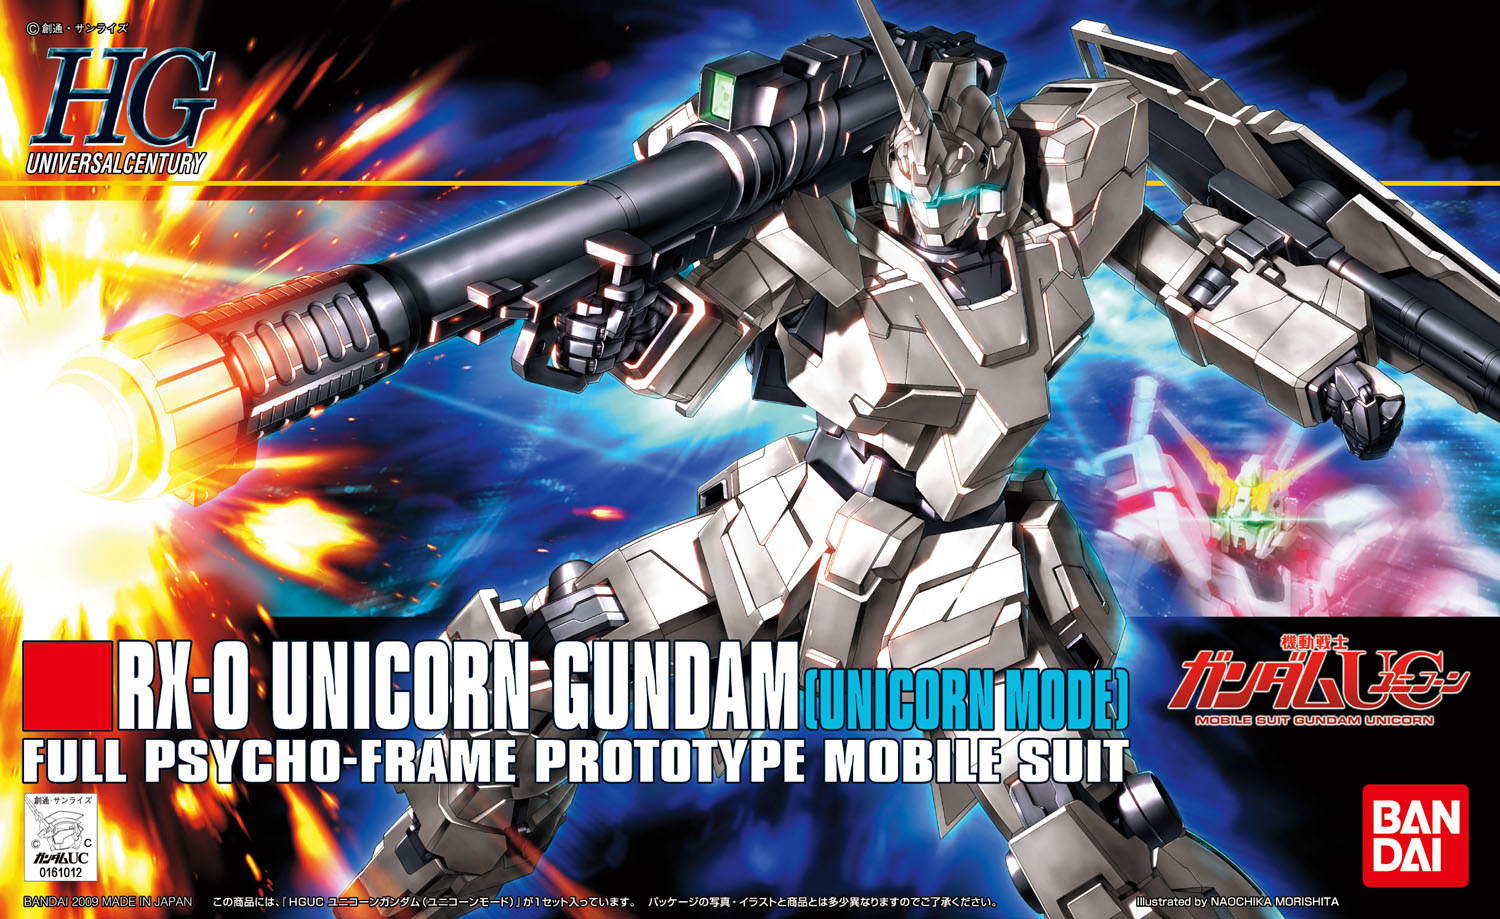 Hguc Rx-0 Unicorn Gundam Destroy Mode Full Psycho-frame Prototype Mobile Suit 1/144 Seven Eleven Limited 